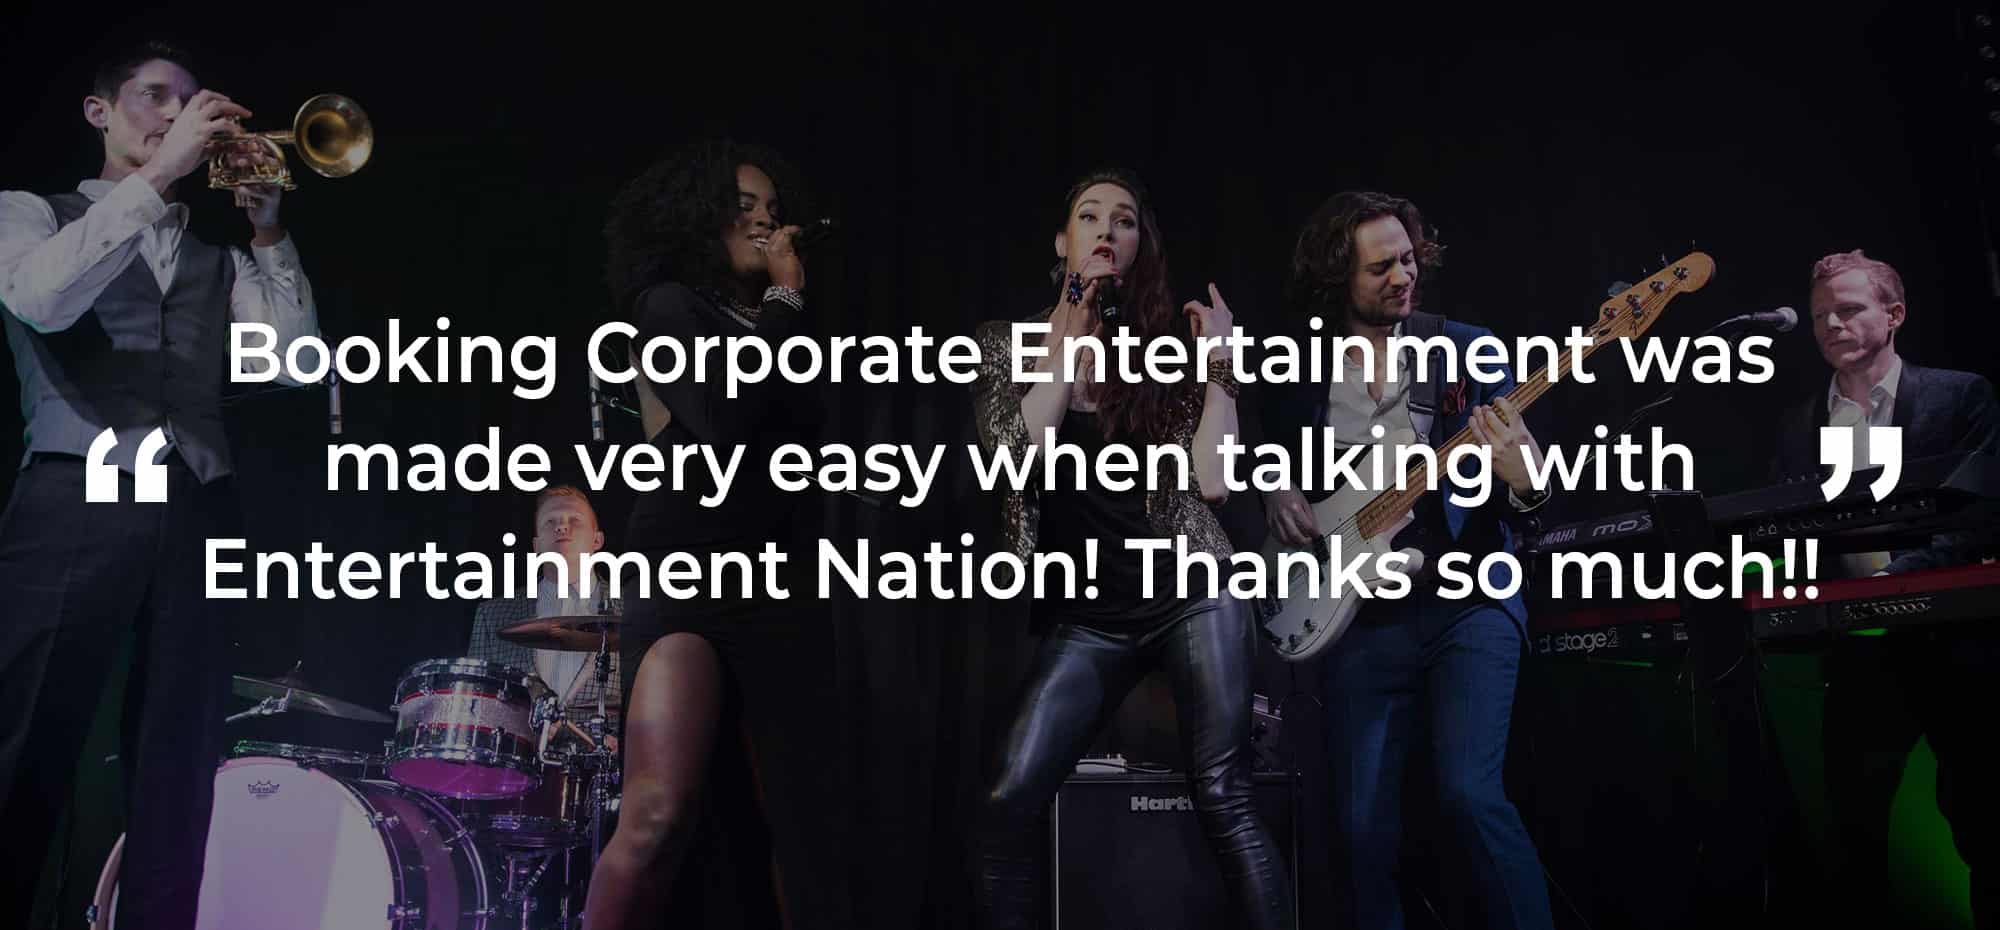 Client Review of Corporate Entertainment Central Scotland